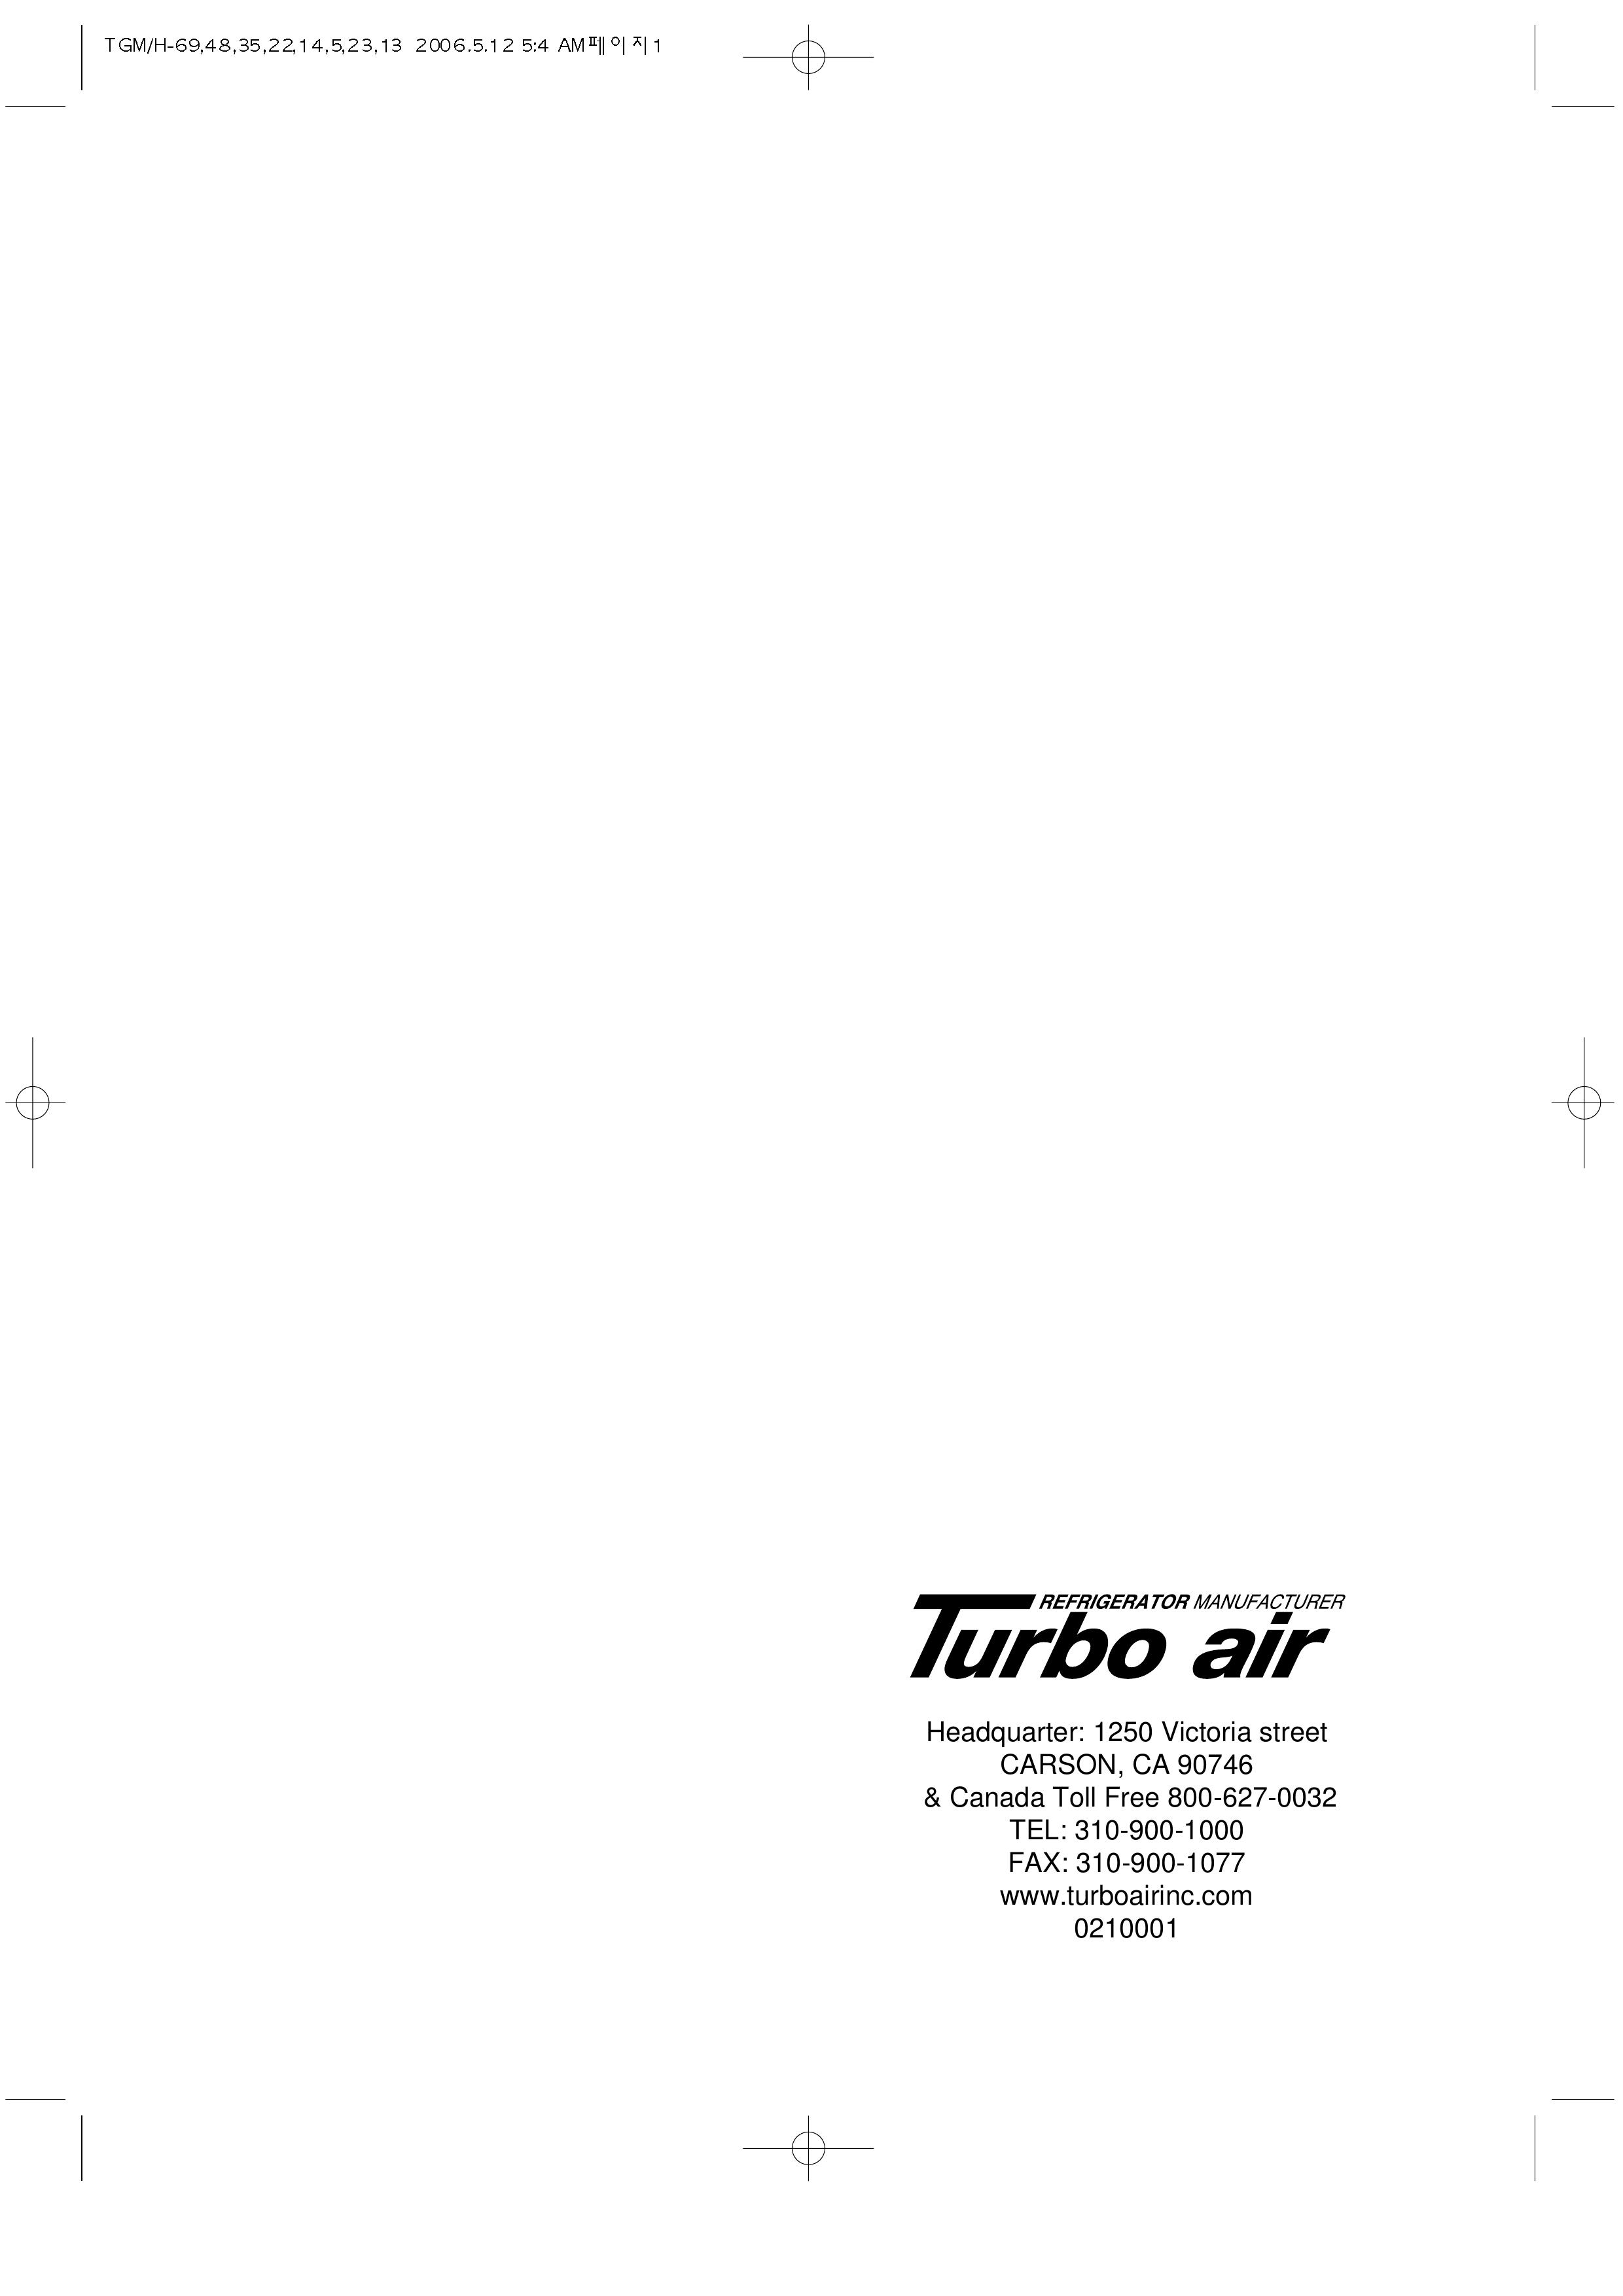 Turbo Air TGM-69R Refrigerator User Manual